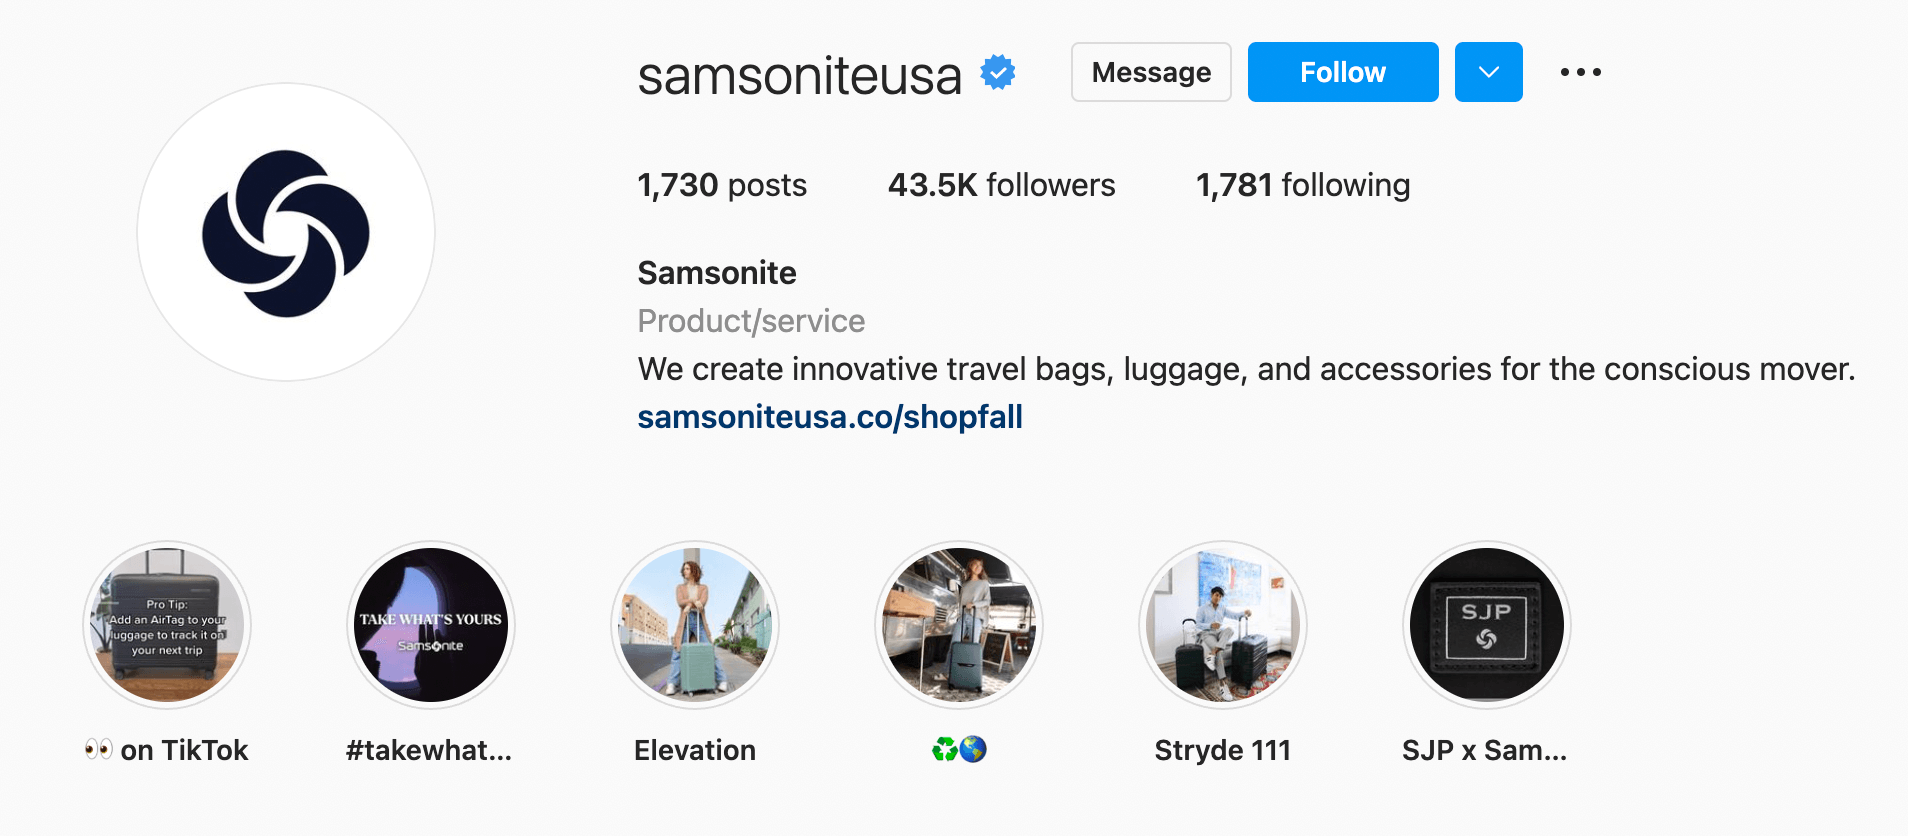 samsoniteusa instagram page samsonite logo highlight reels showing luggage and sustainability initiatives